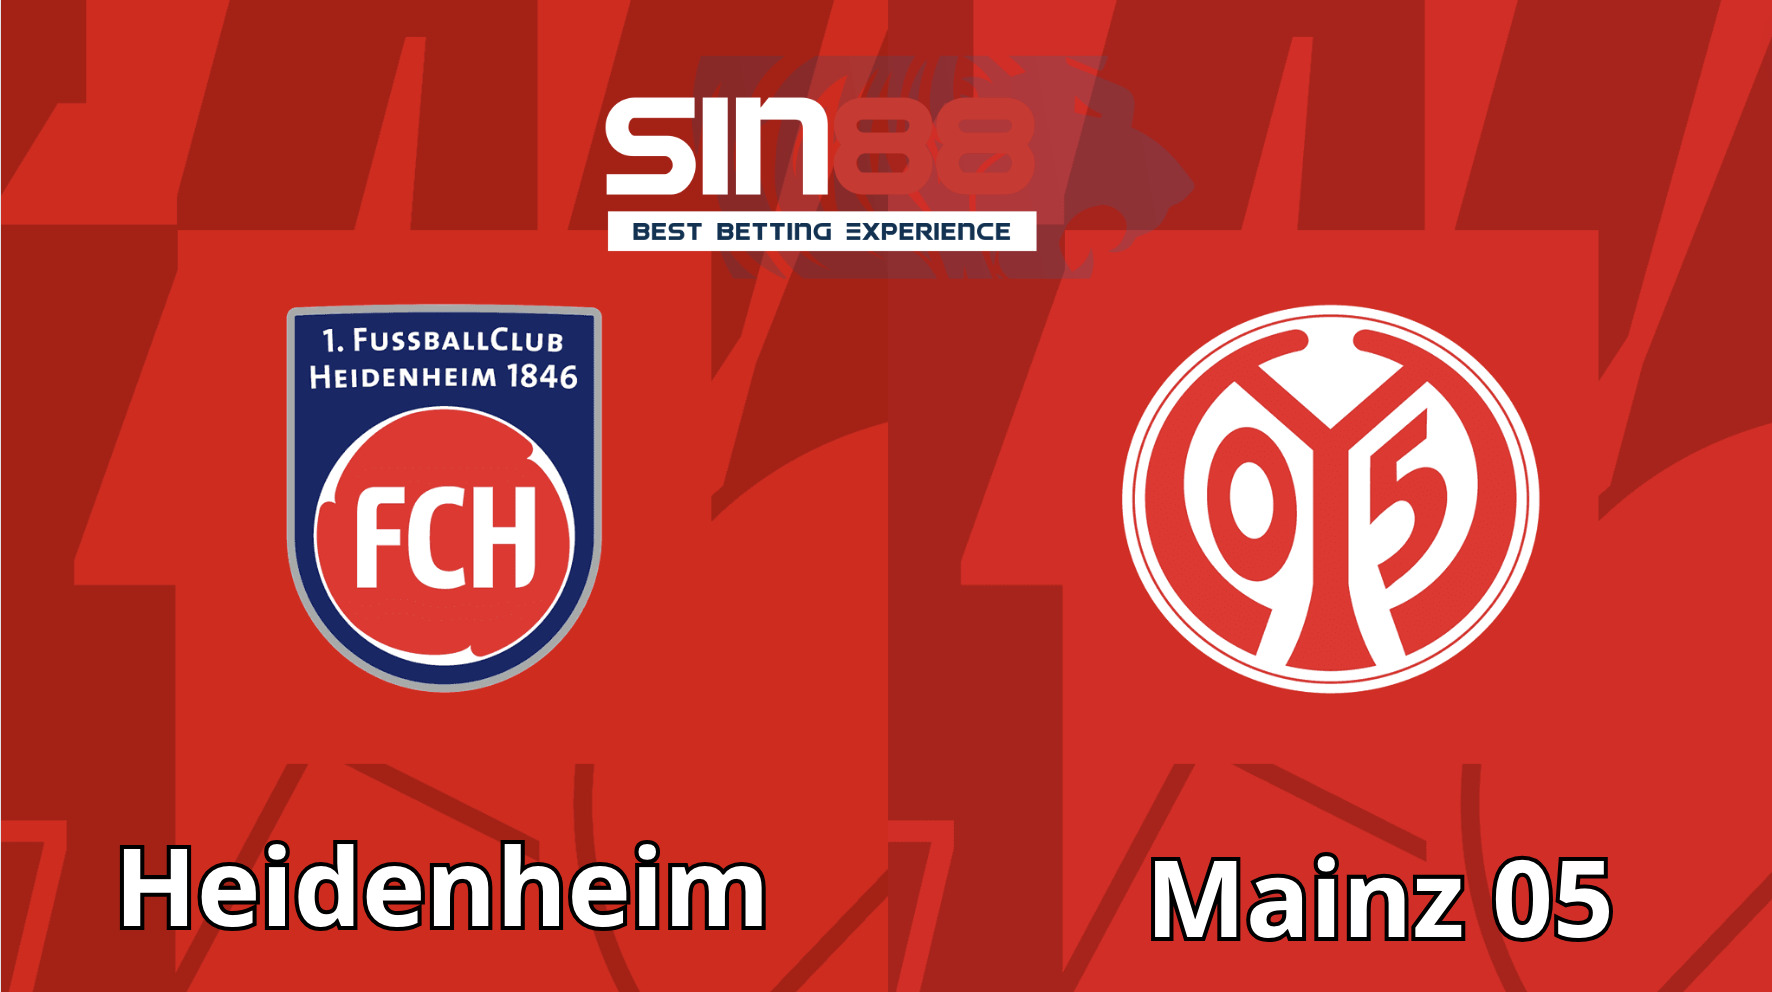 Soi kèo trận đấu Hendenheim vs Mainz 05